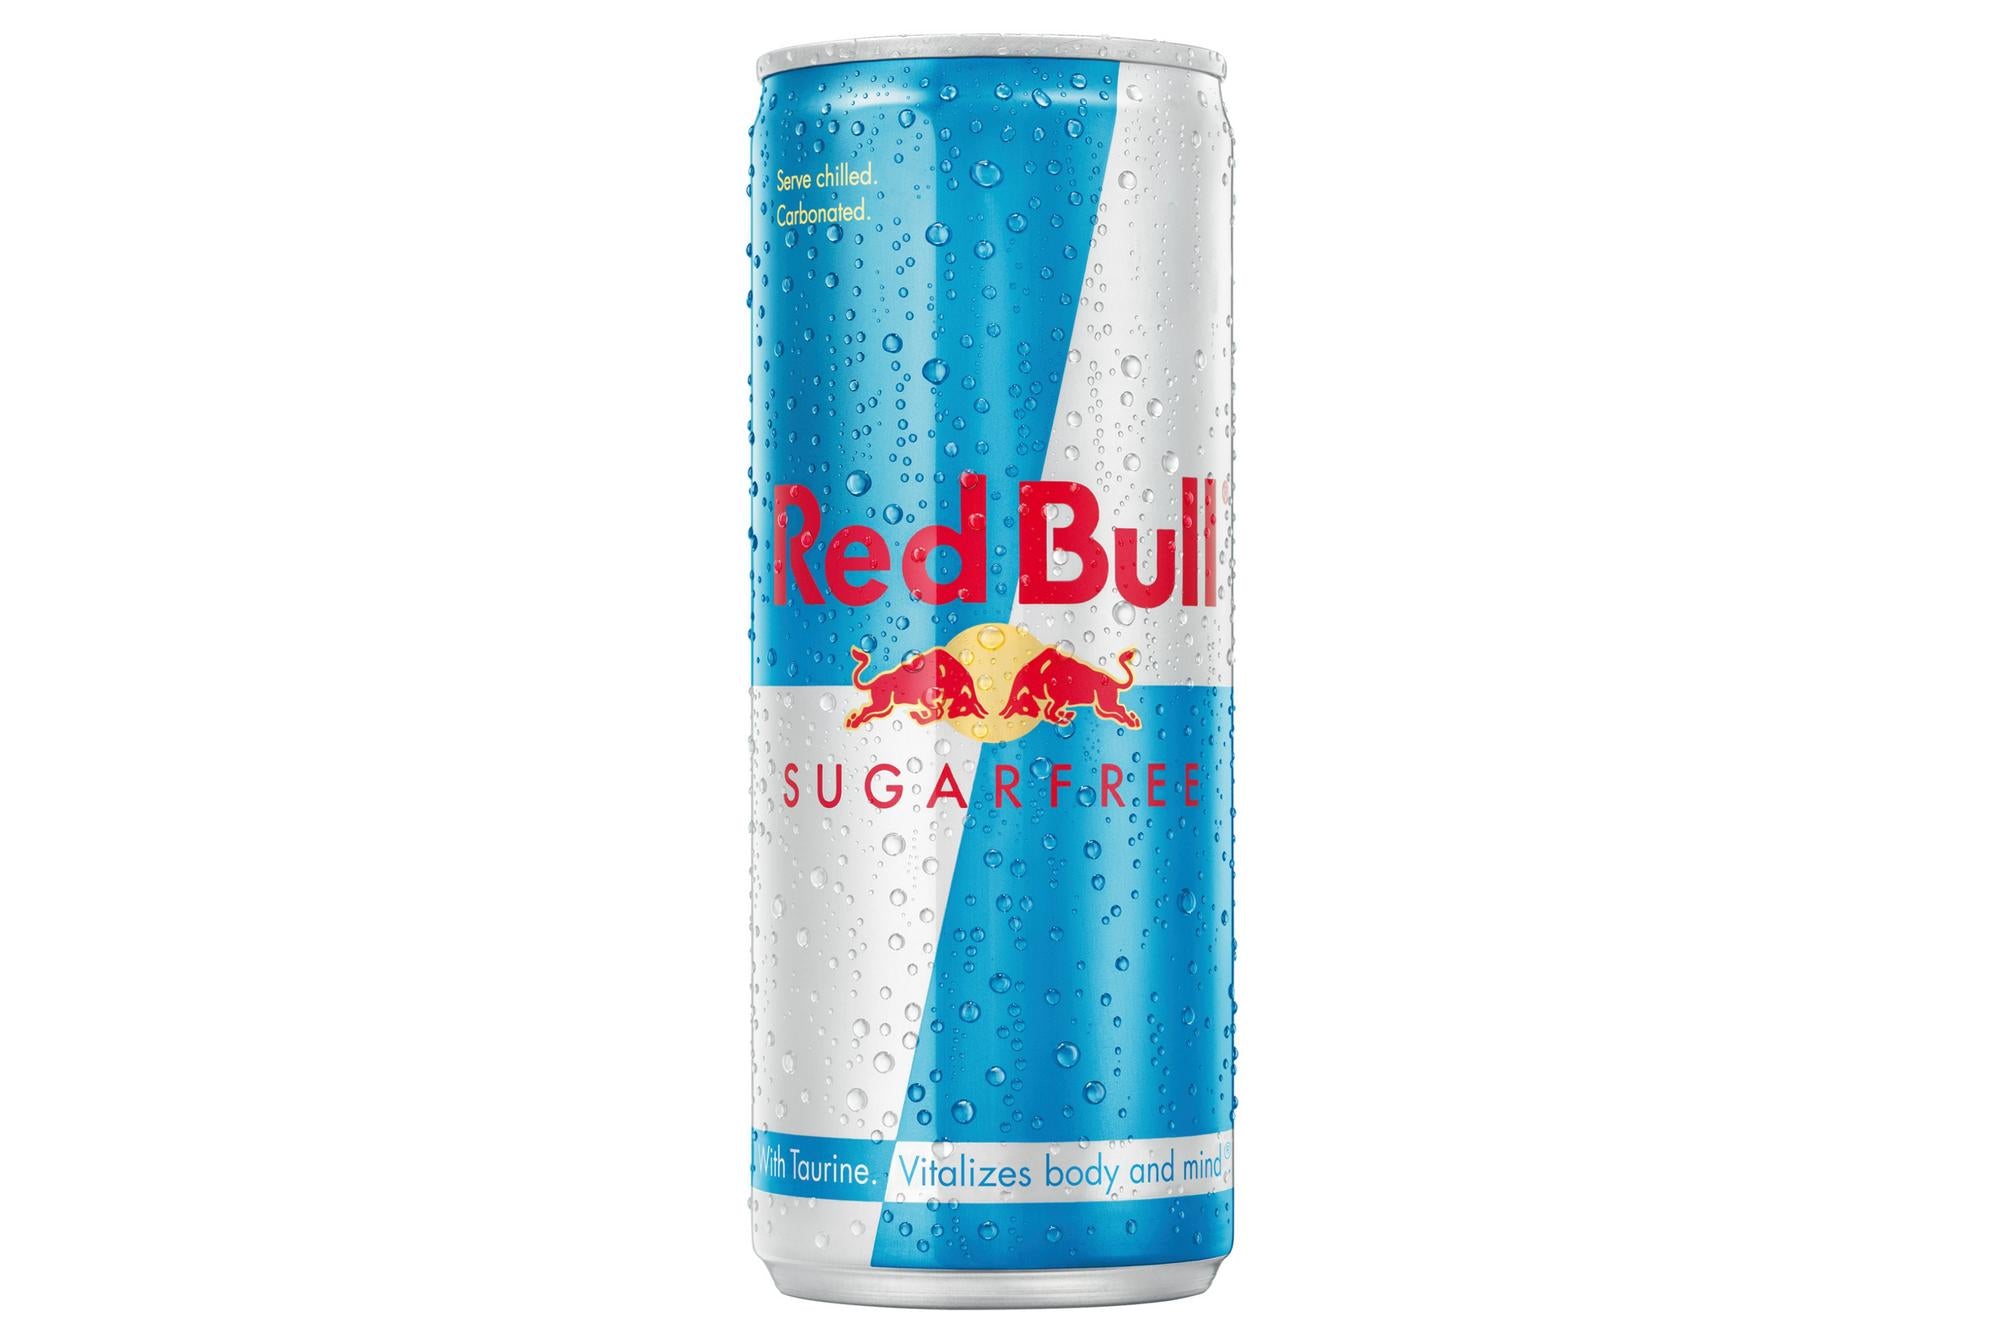 Red Bull Sugar Free 250ml